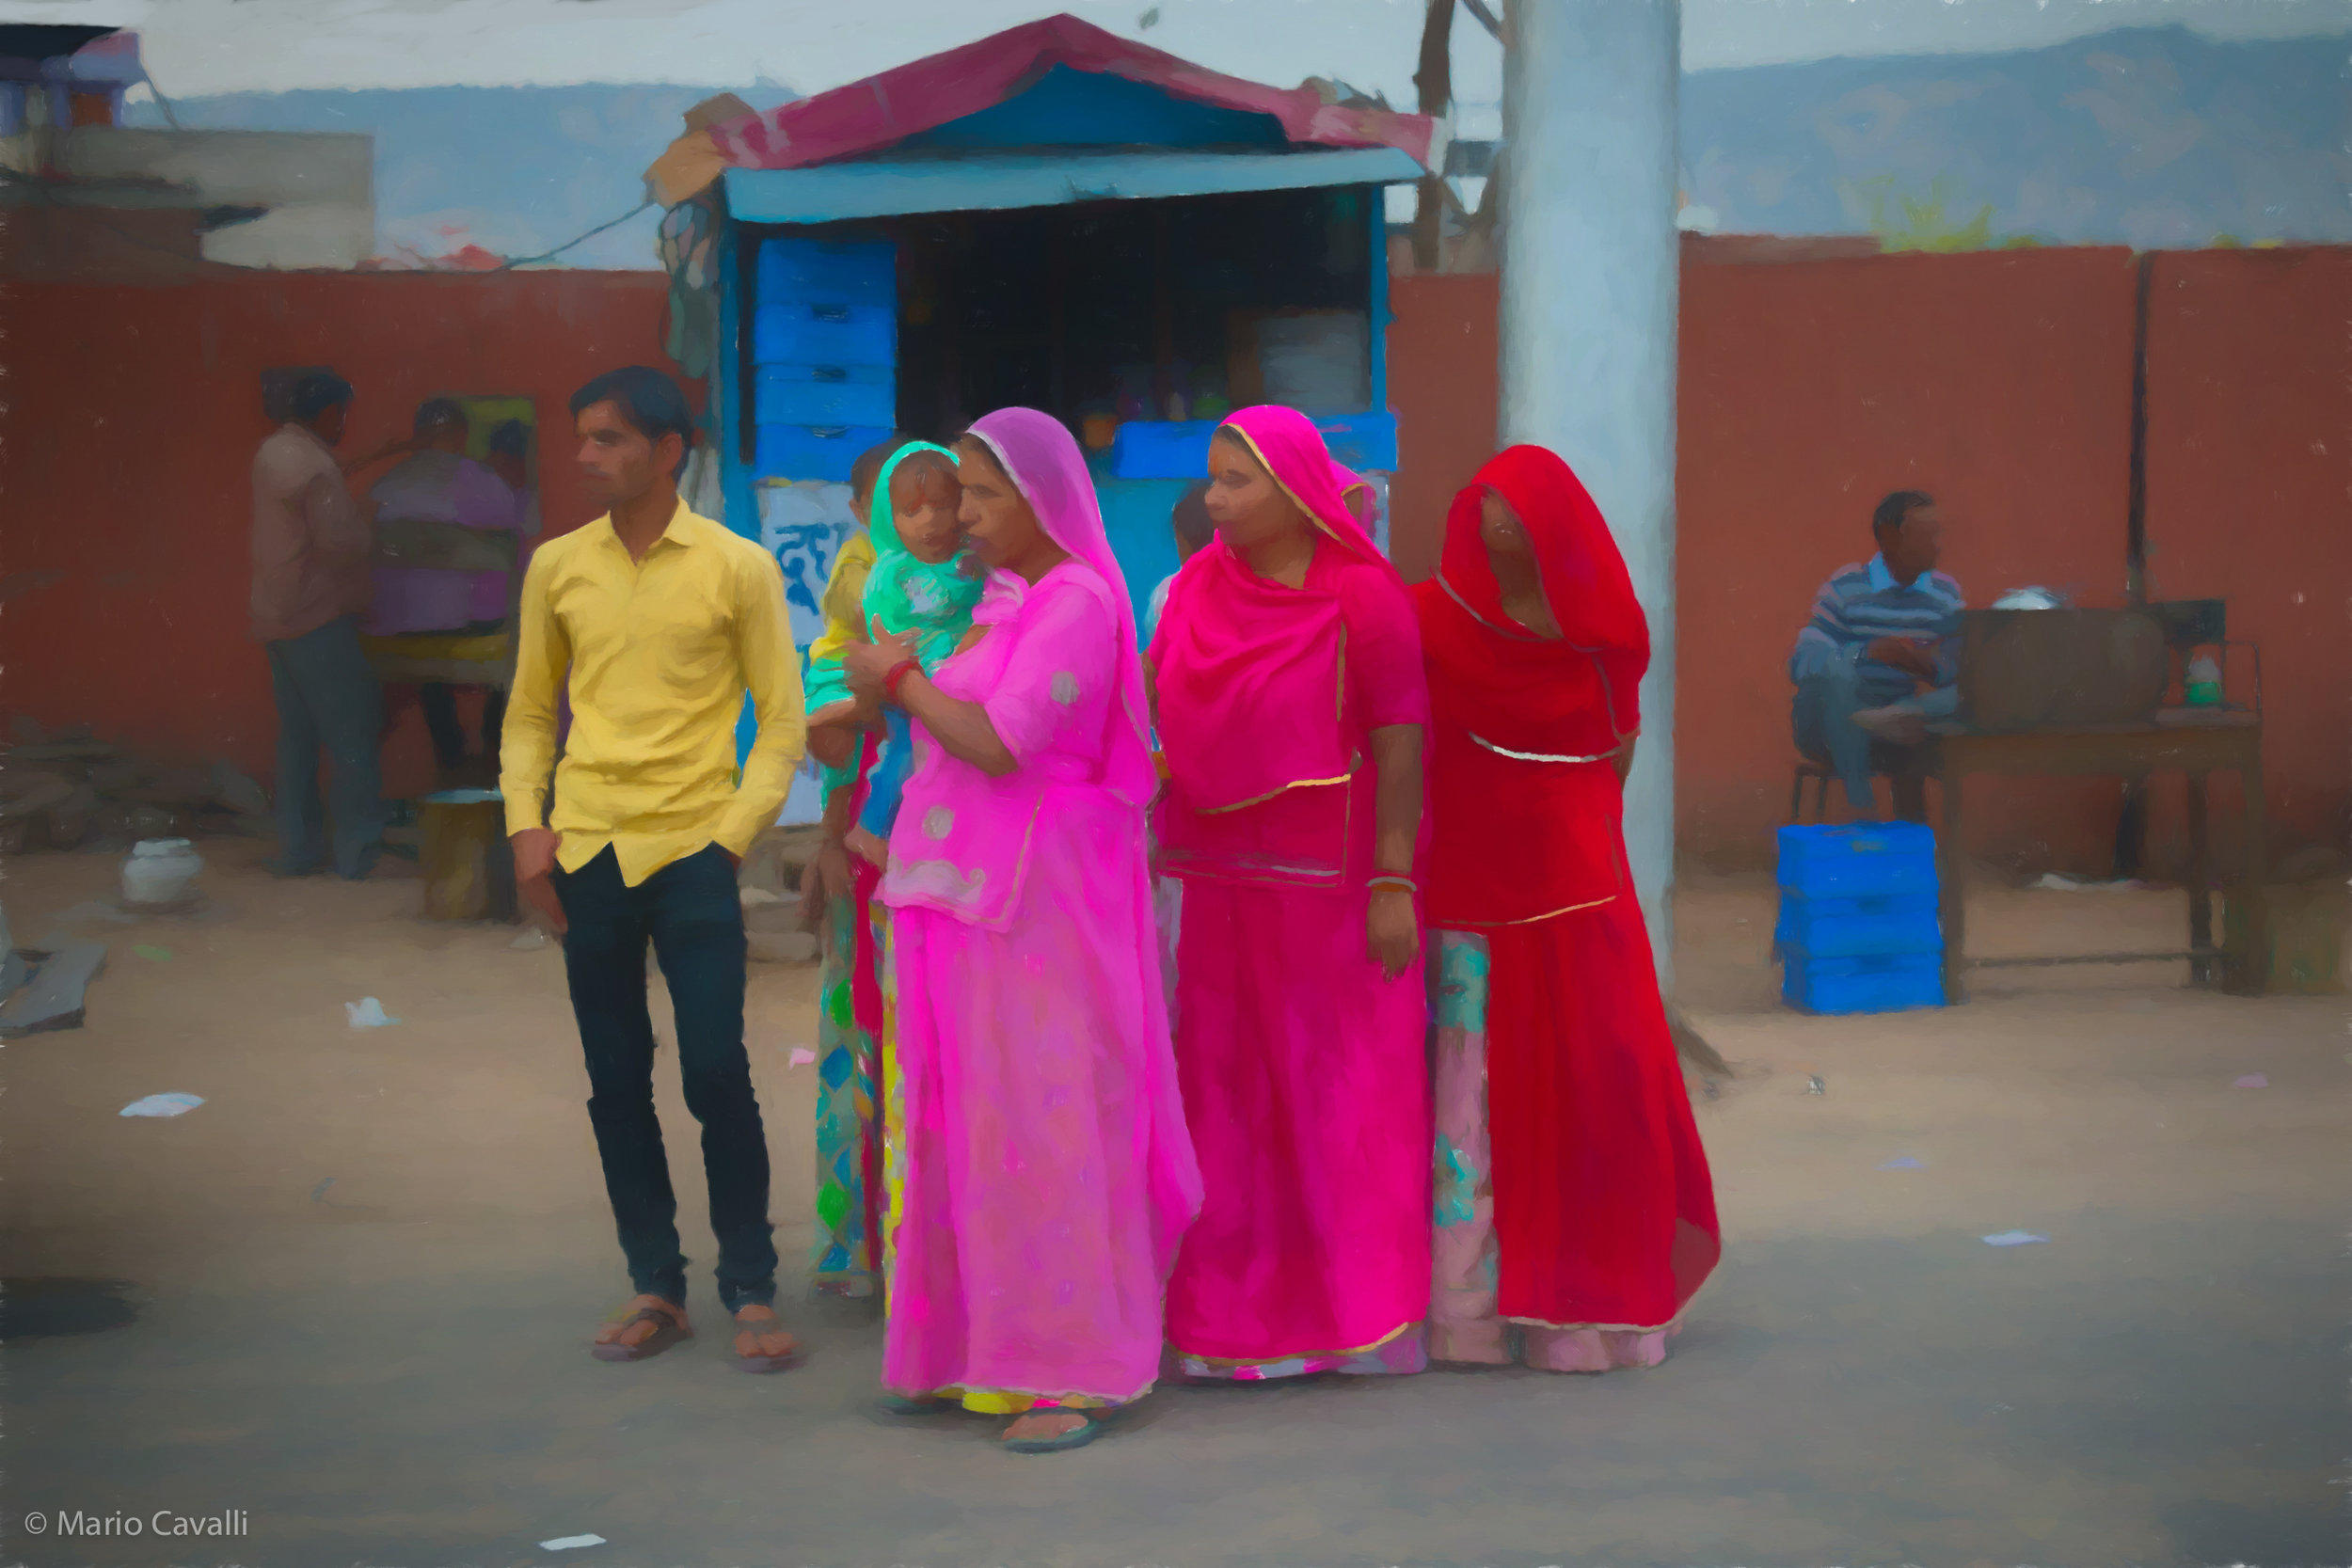 Bus Stop, Jaipur